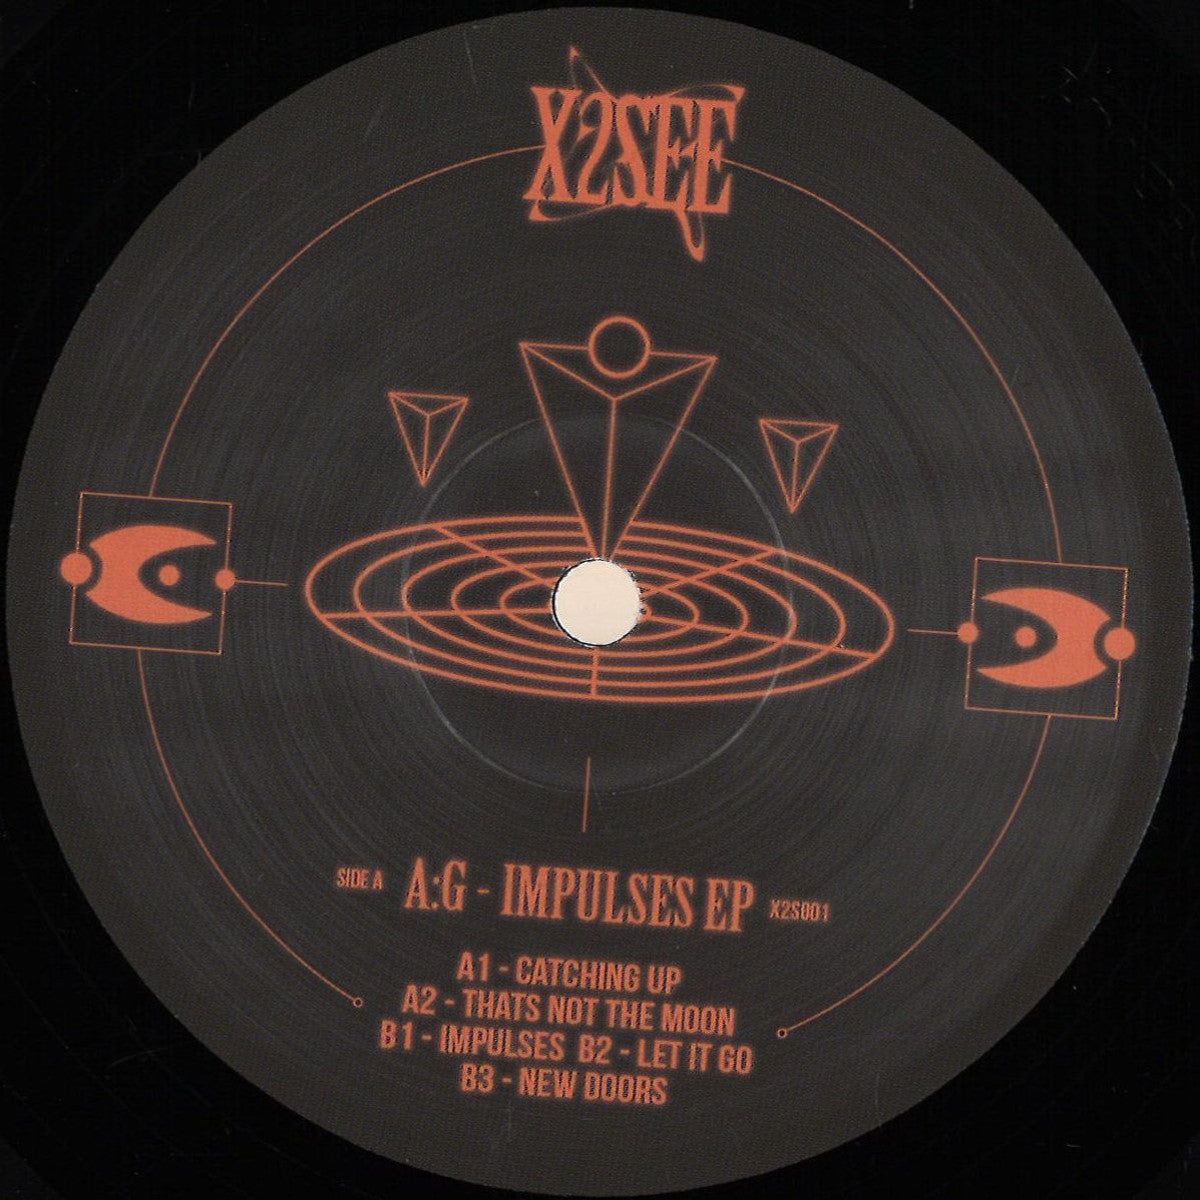 A:G - IMPULSE EP